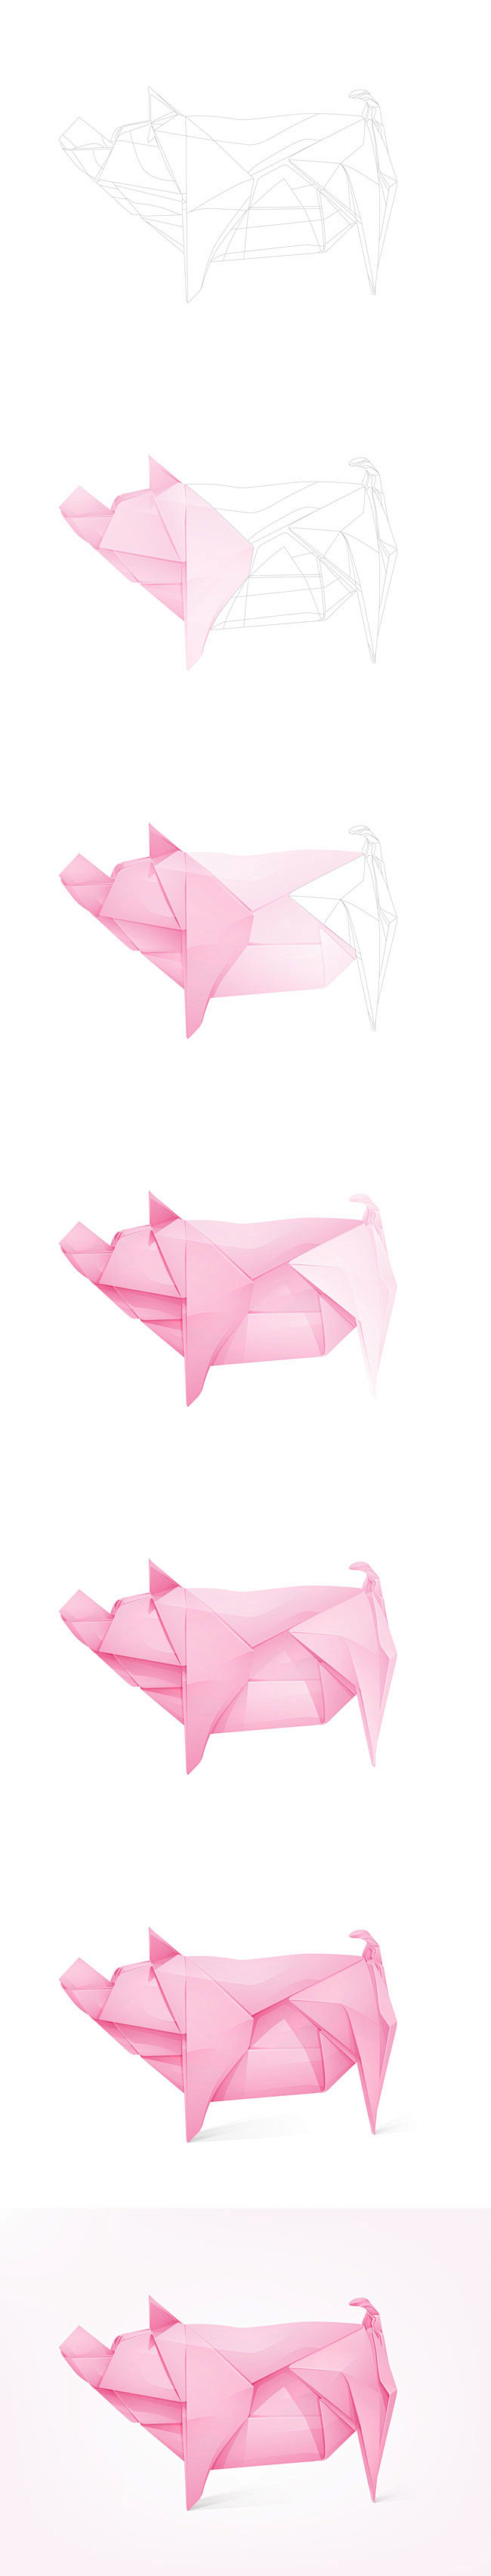 Piggy-bank-origami-p...